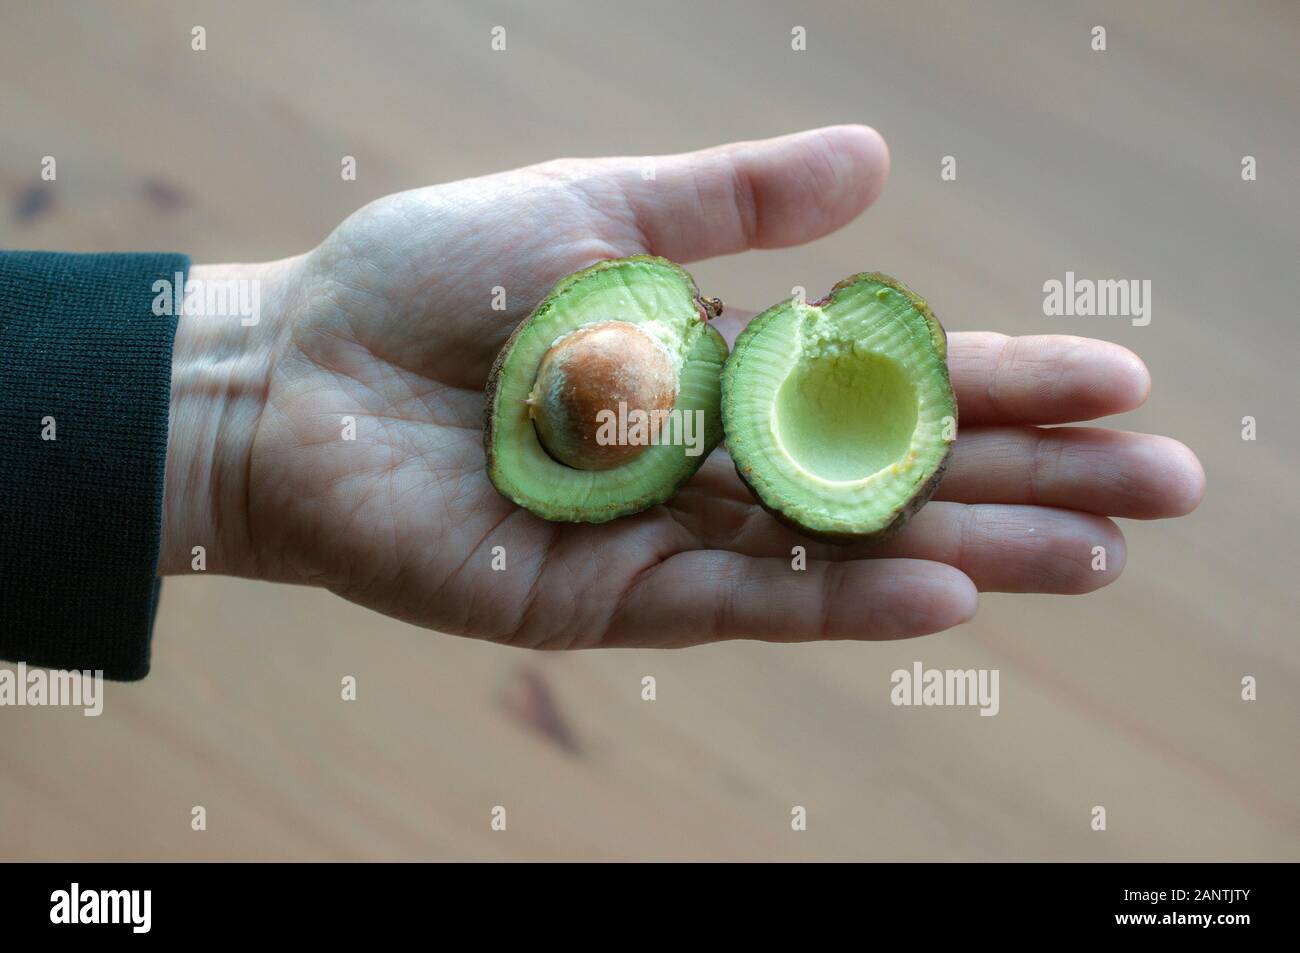 Hand holding a ripe baby avocado cut open. Stock Photo